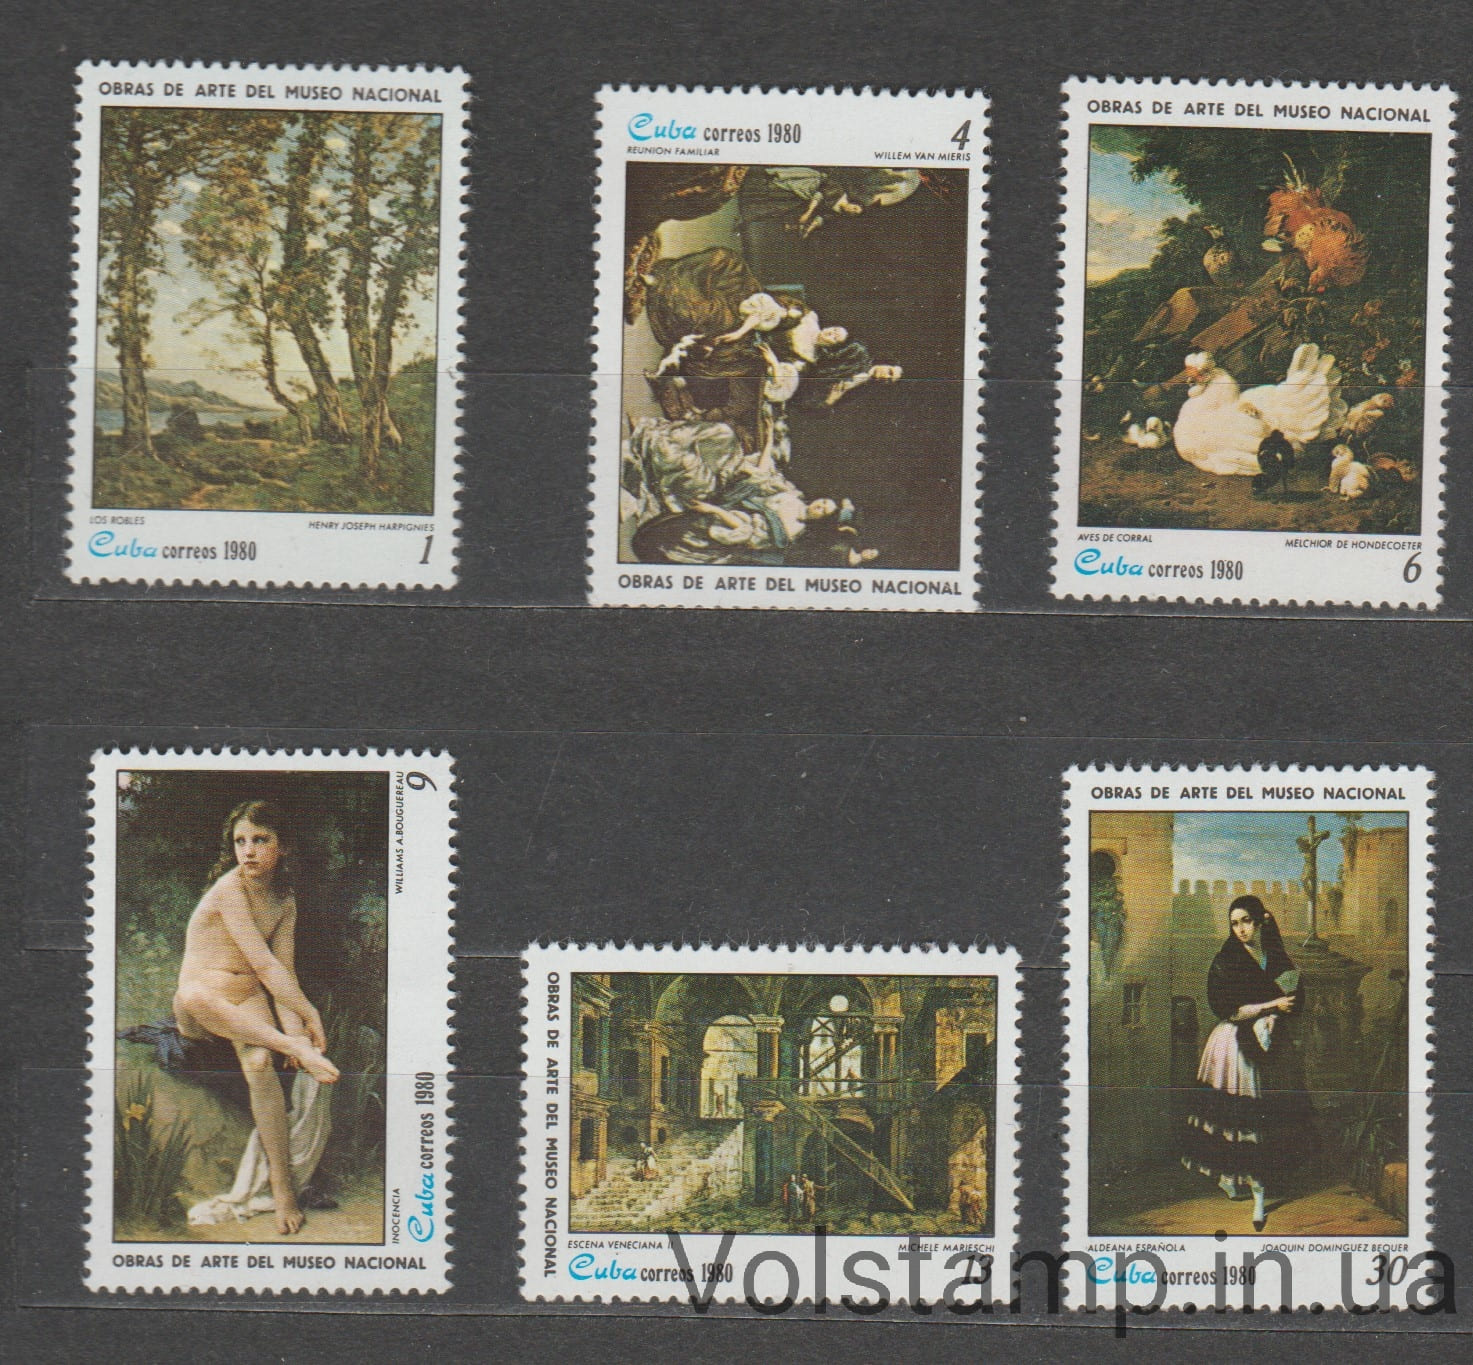 1976 Cuba Stamp Series (Painting, Museum) MNH №2463-2468